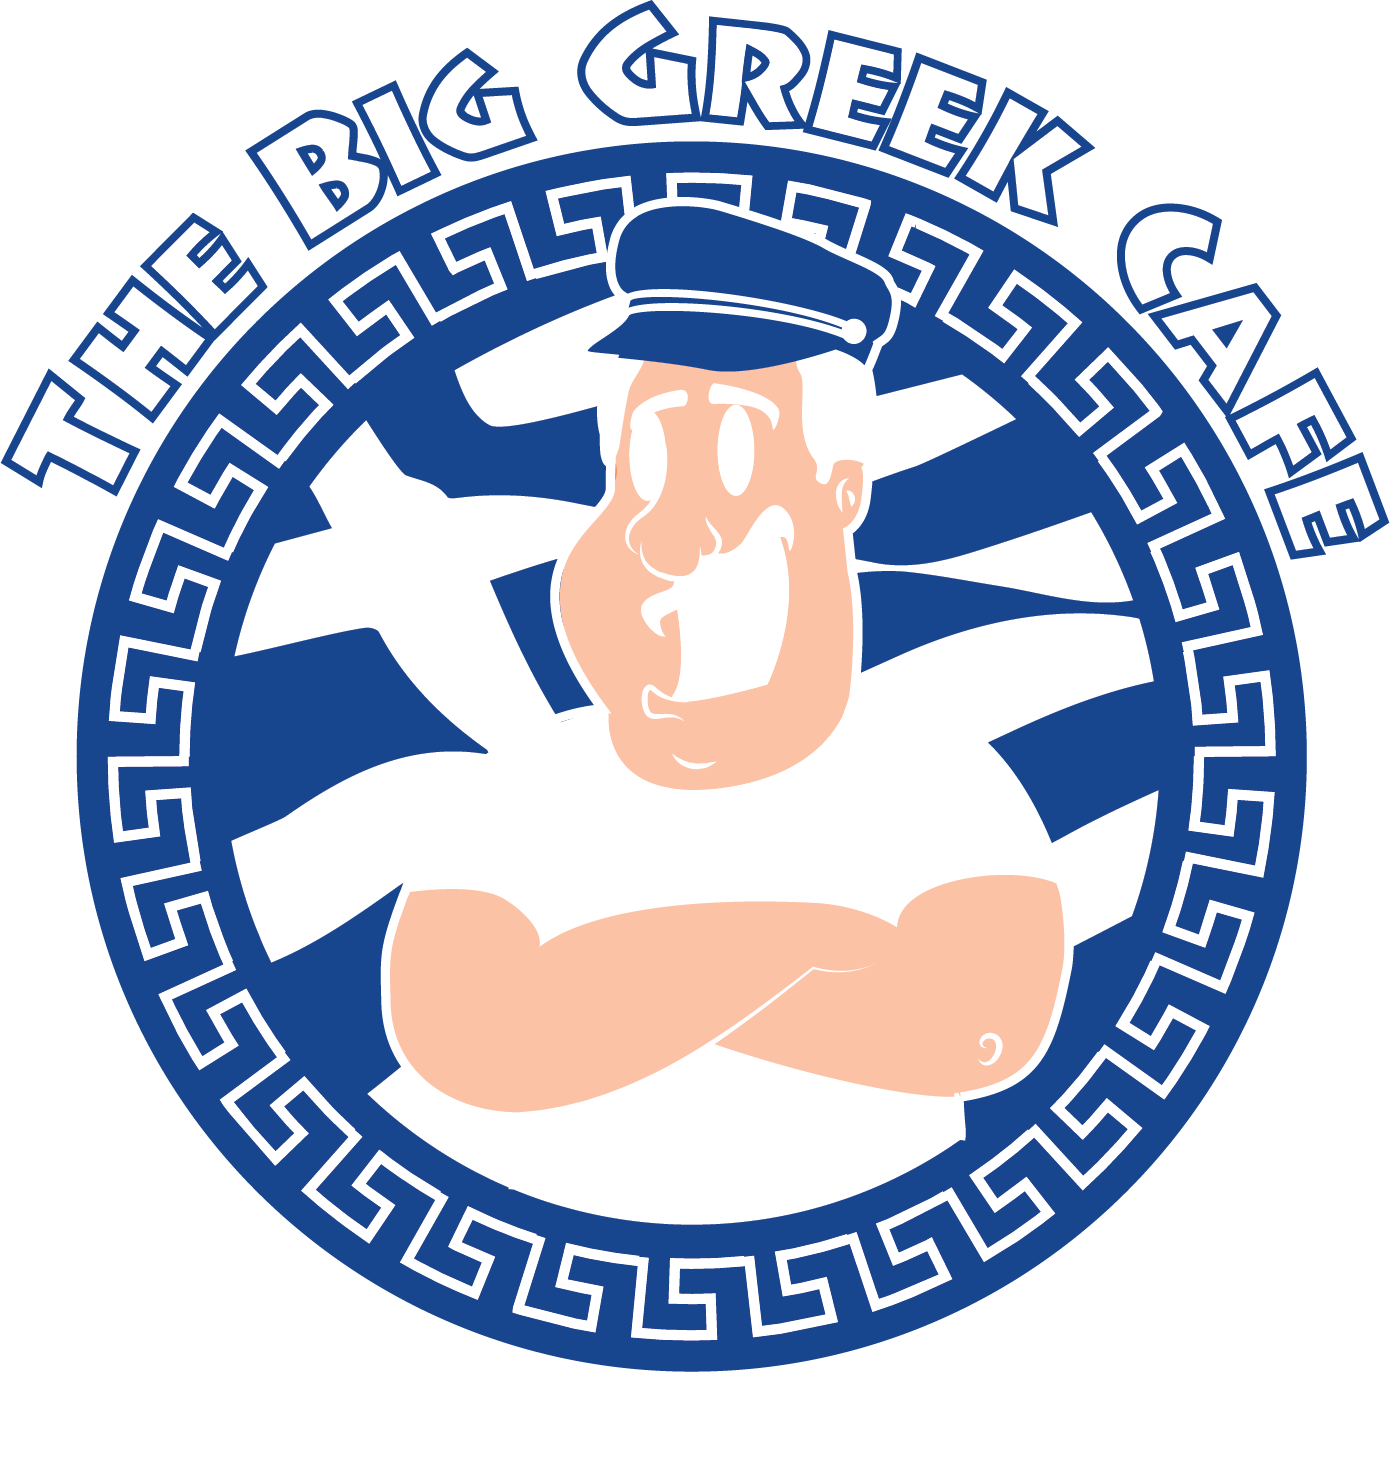 Big Greek Cafe (1390x1474)